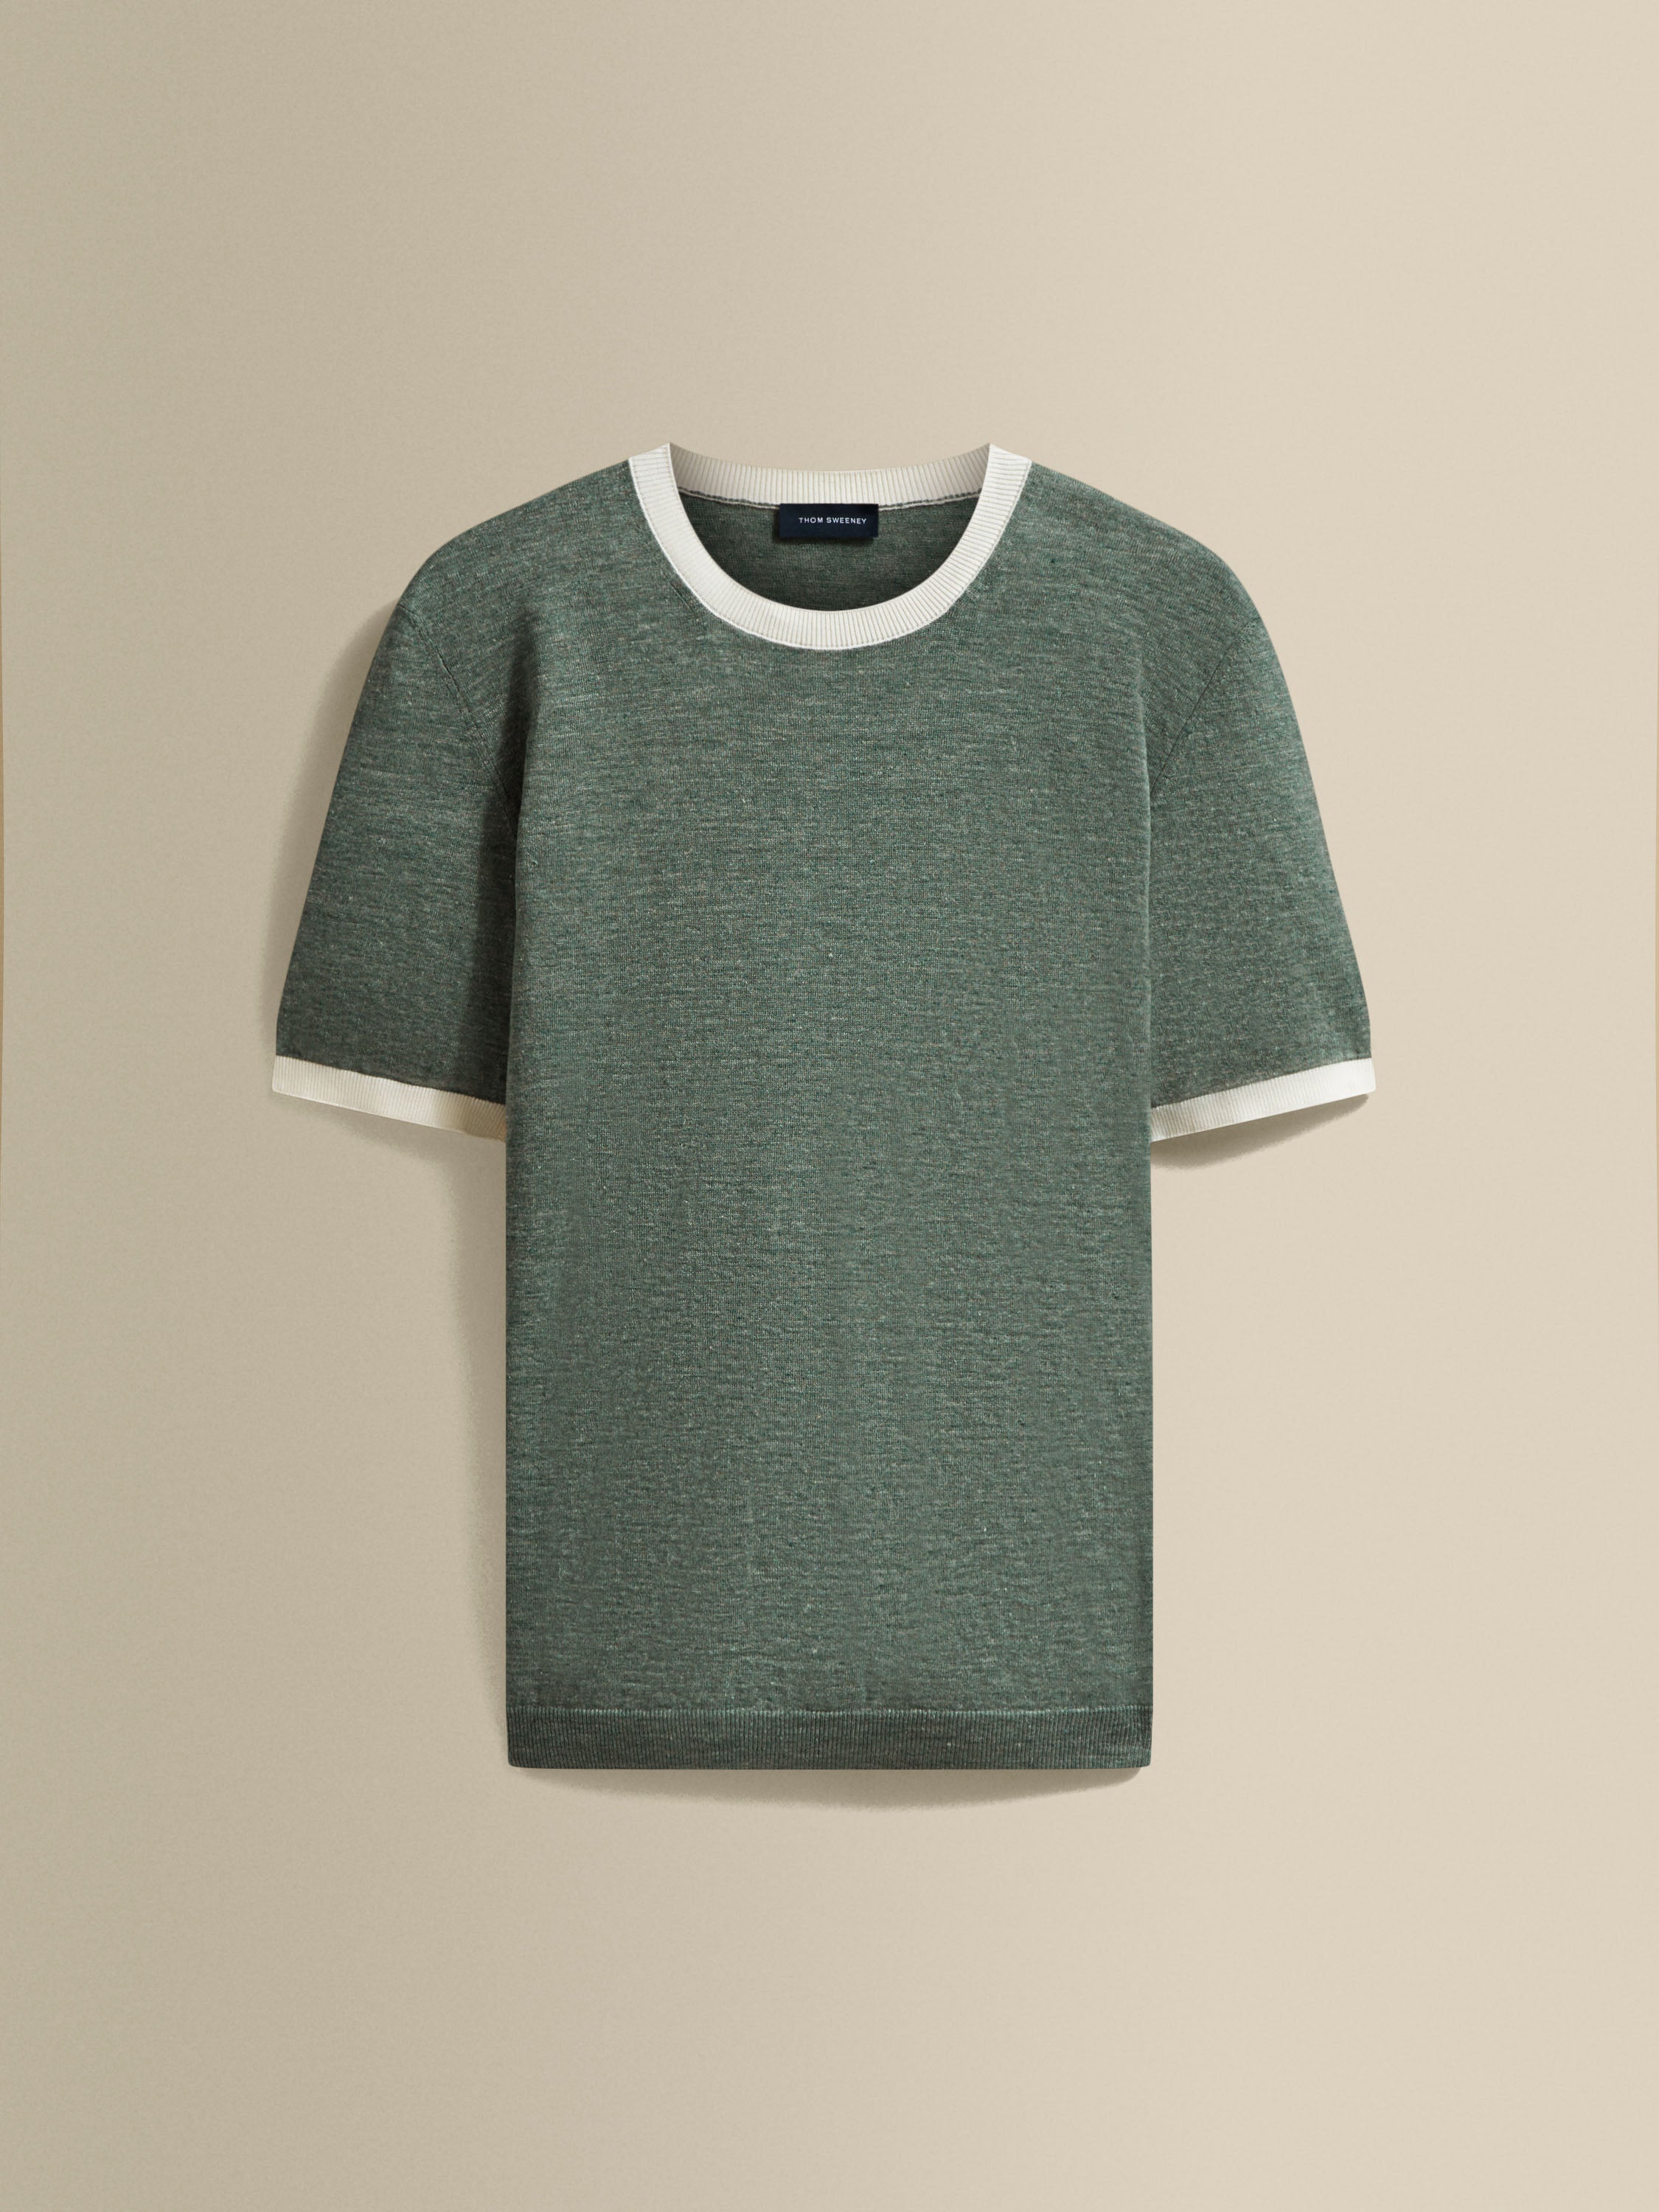 Linen Cotton Contrast Rib T-Shirt Green Product Image